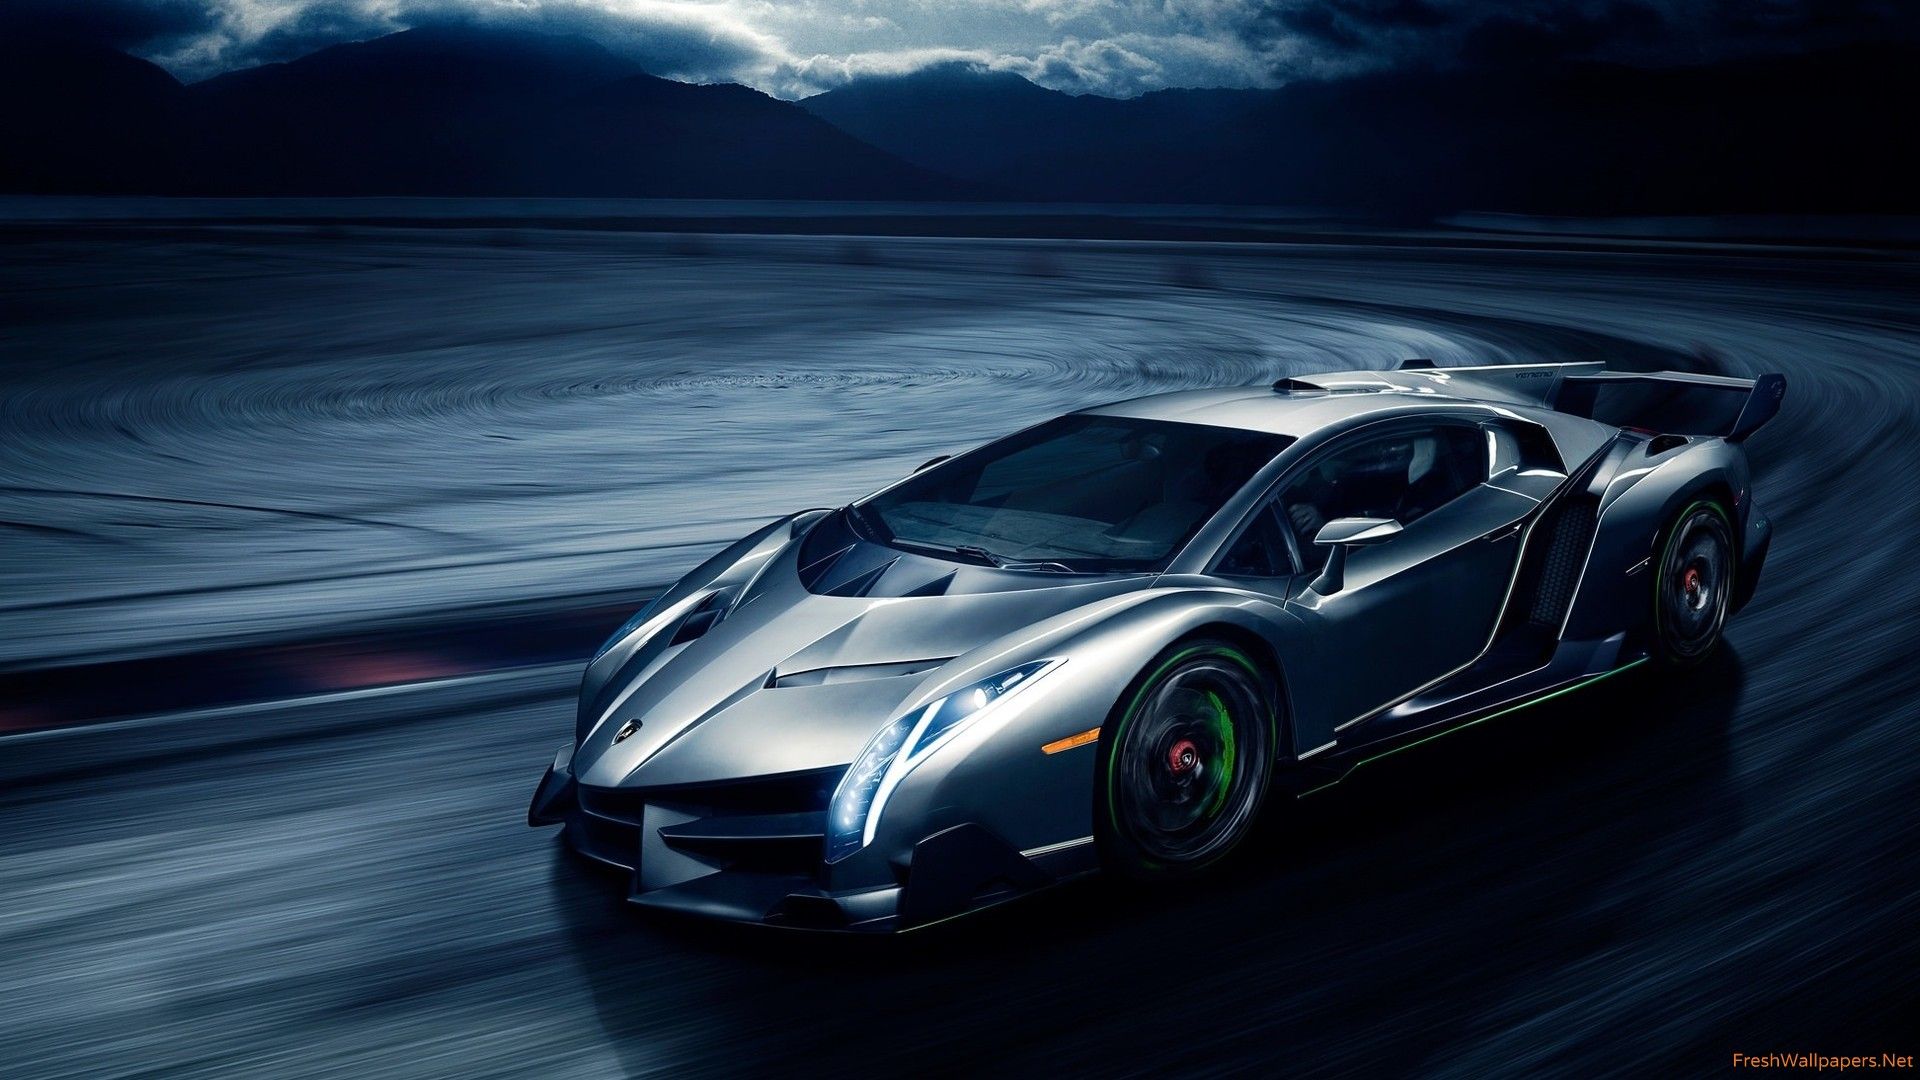 2014 Lamborghini Veneno Hypercar wallpapers | Freshwallpapers